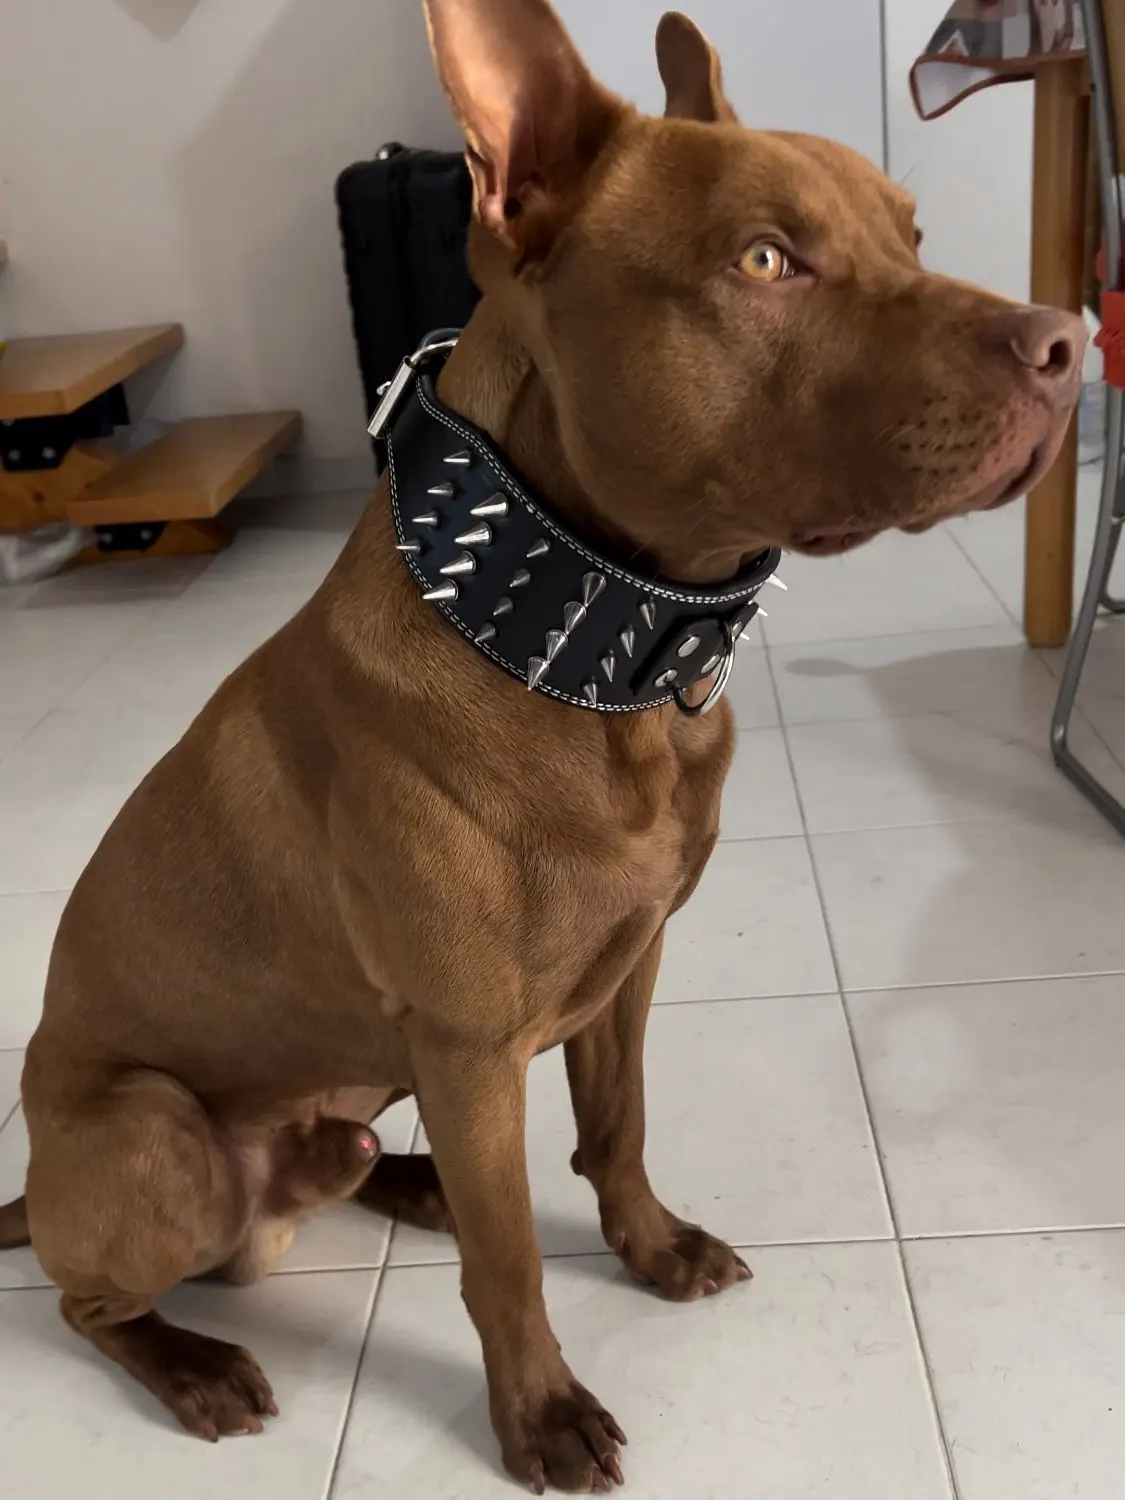 Cool Dog Collar Spiked Studded Leather Pet Dog Collars Pitbull Bulldog Big Dog  Collar Adjustable For Medium Large Dogs - AliExpress